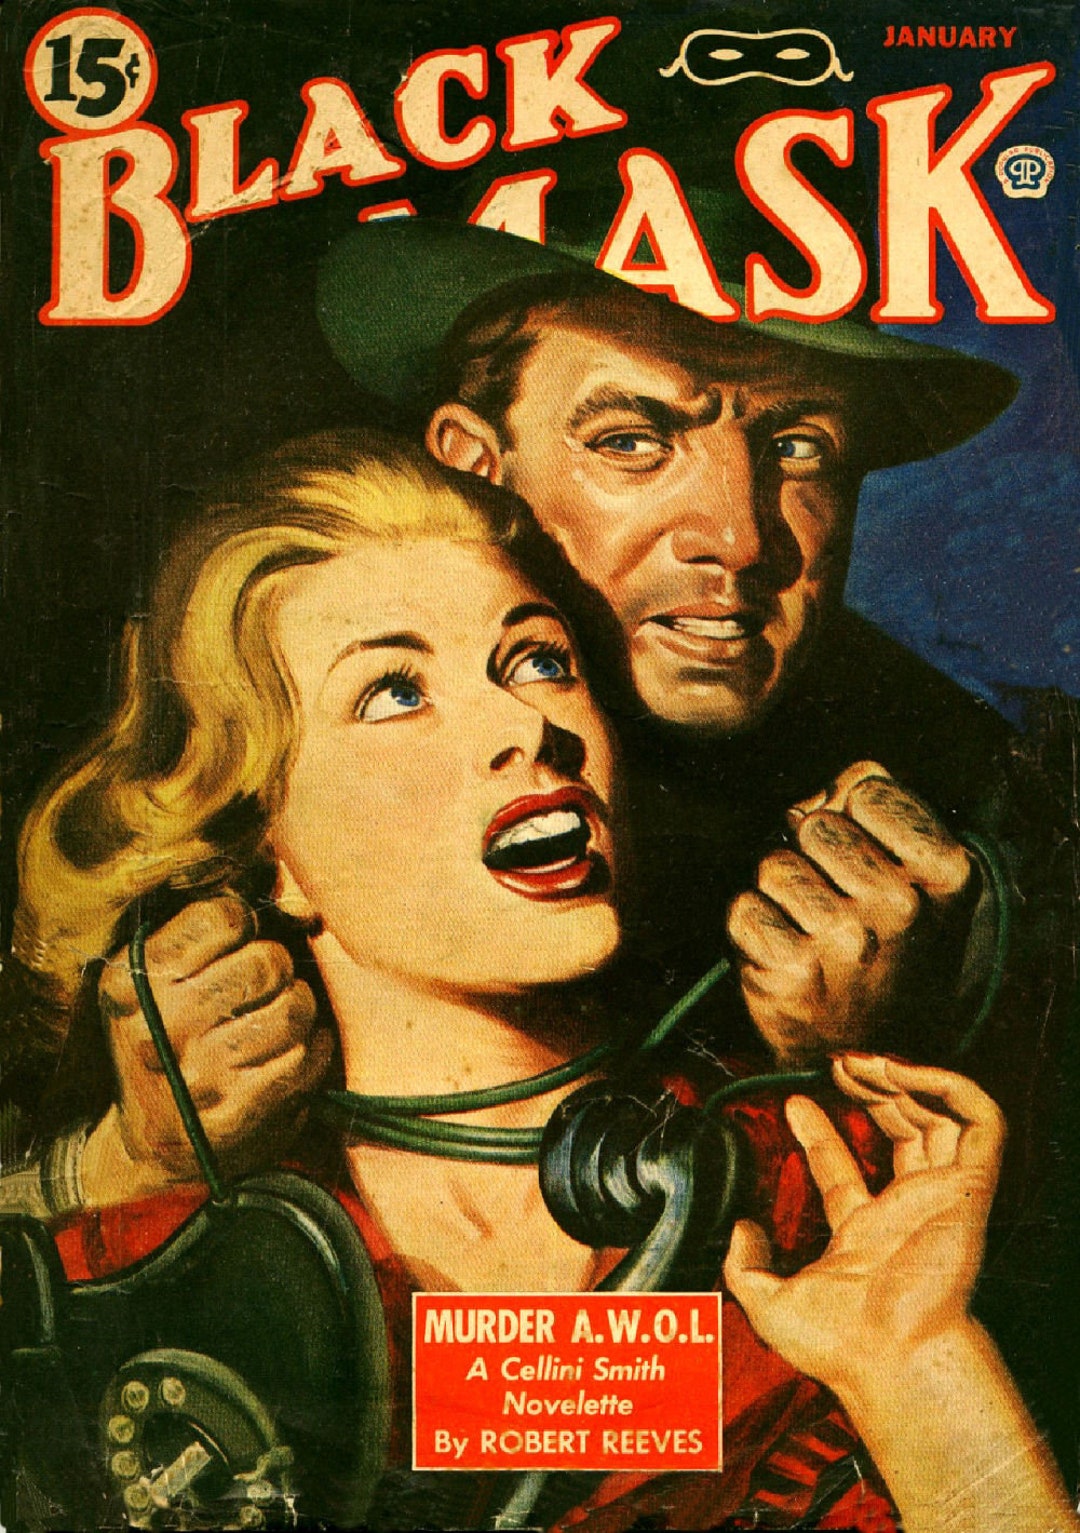 BLACK MASK Jan. 1945 Pulp Detective Magazine Cover - Etsy